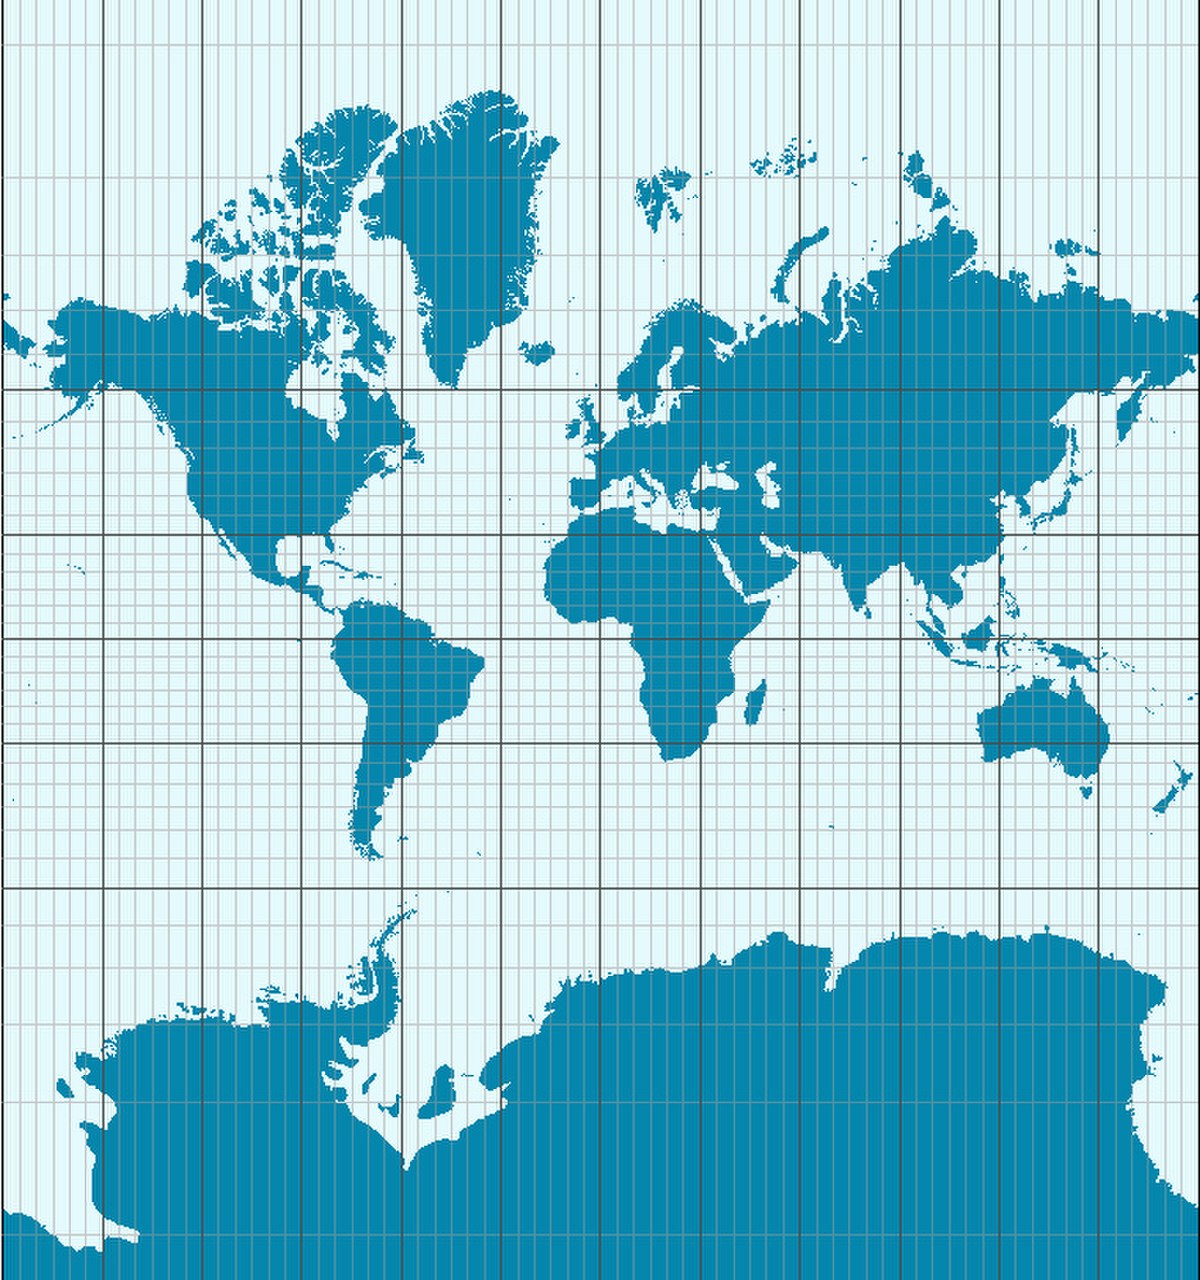 Projection de la carte de Mercator. Schéma d'un globe de la terre